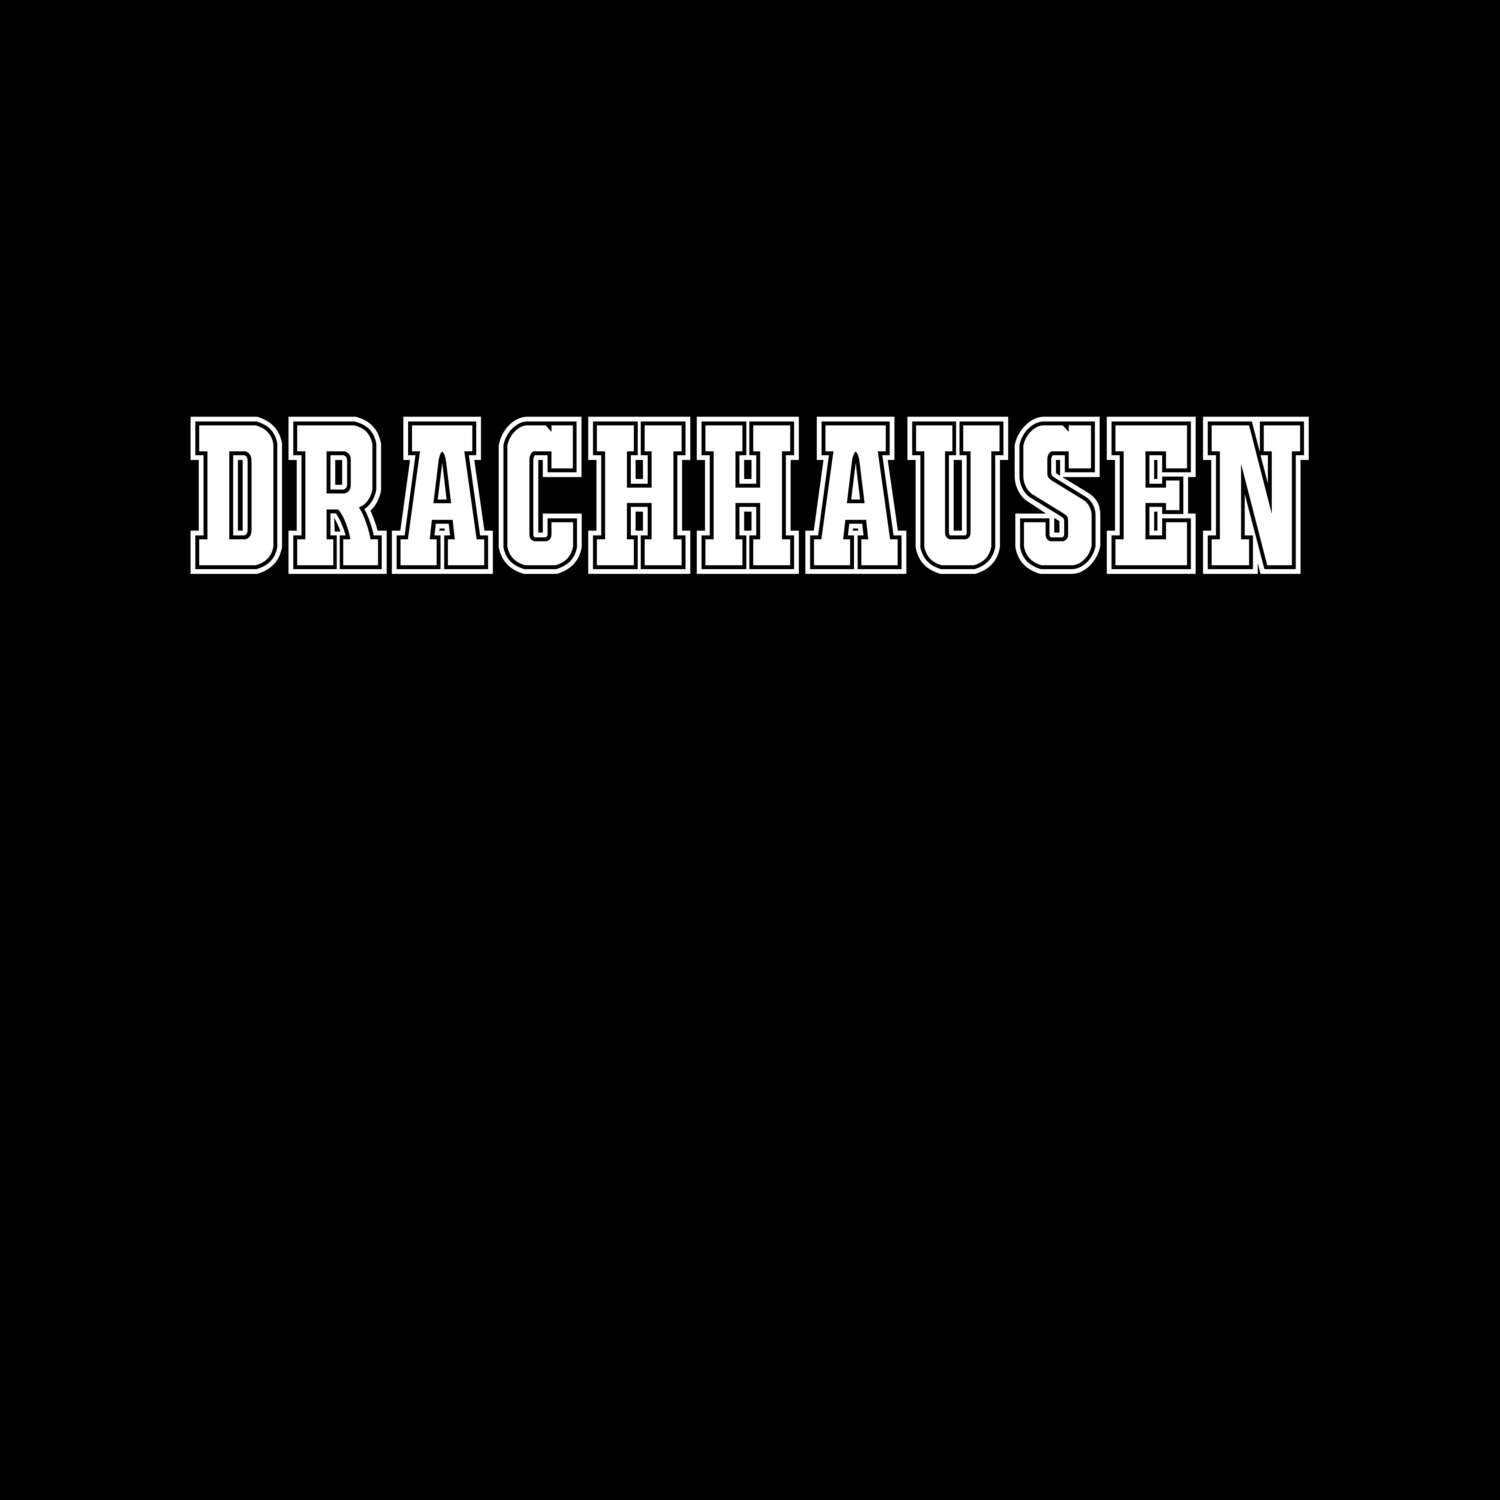 Drachhausen T-Shirt »Classic«